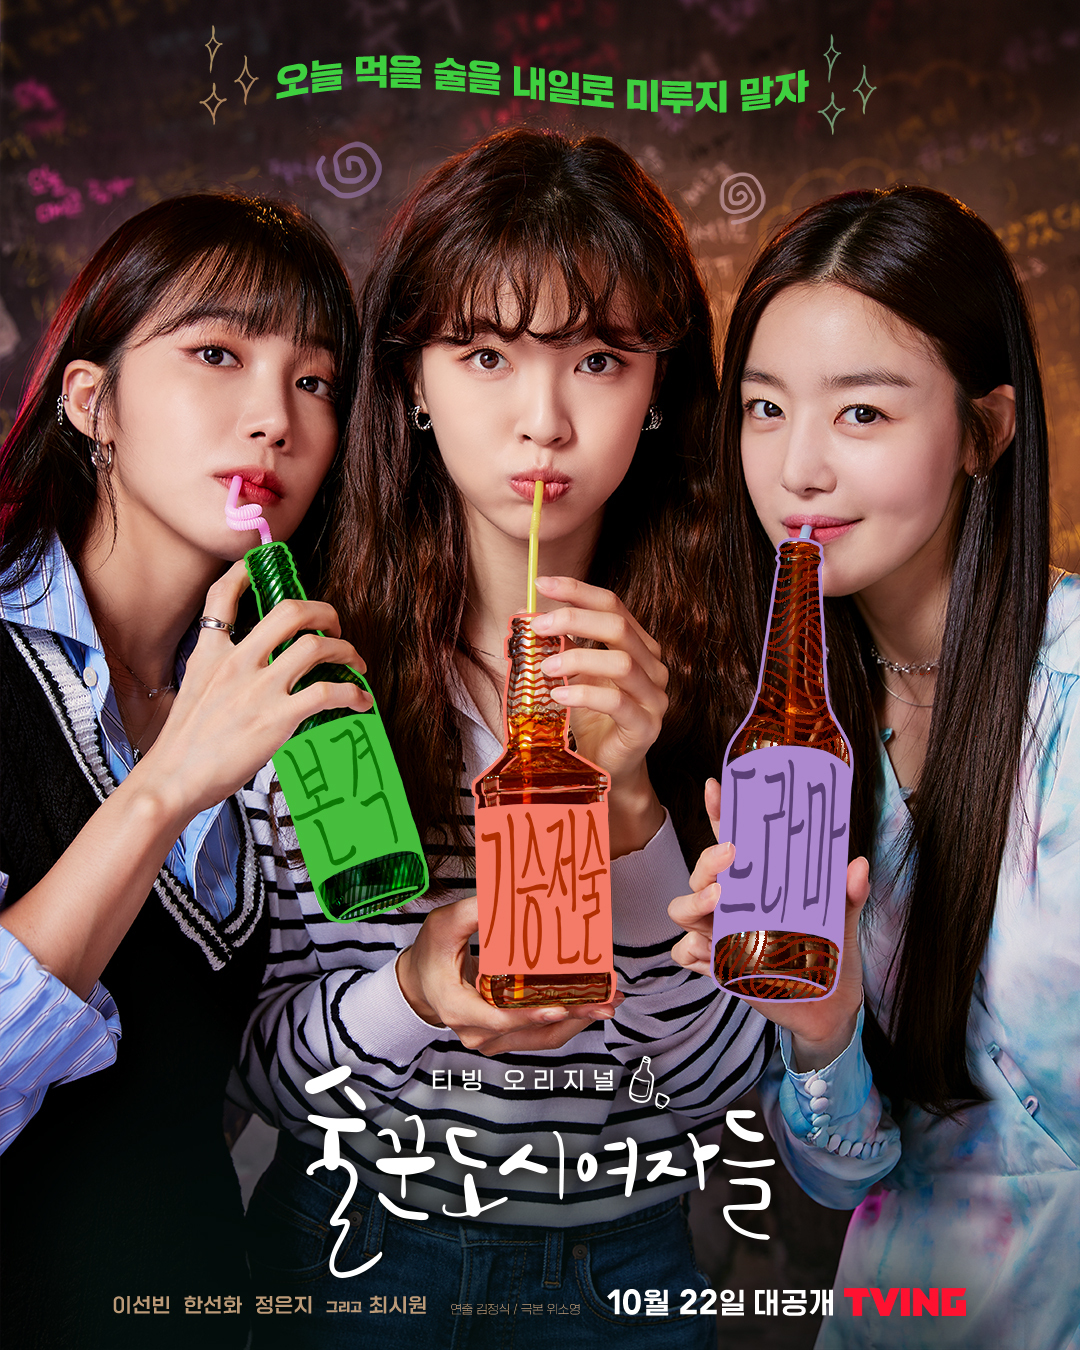 Poster of Korean streaming service platform Tving’s drama sereis “Work Later, Drink Now“ (Tving)